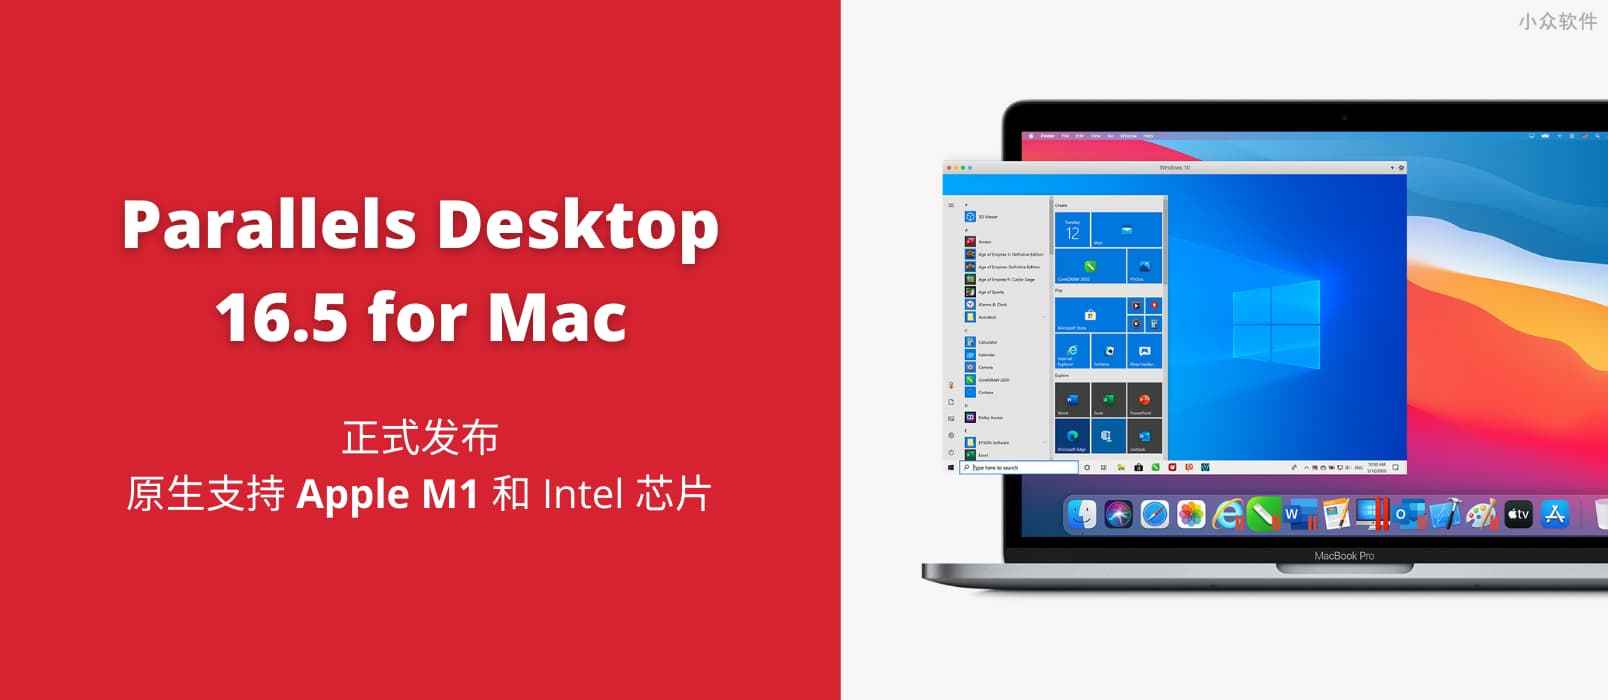 Parallels Desktop 16.5 for Mac 正式发布，原生支持 M1 和 Intel 芯片，在 Mac 上以原生速度运行 Windows 10